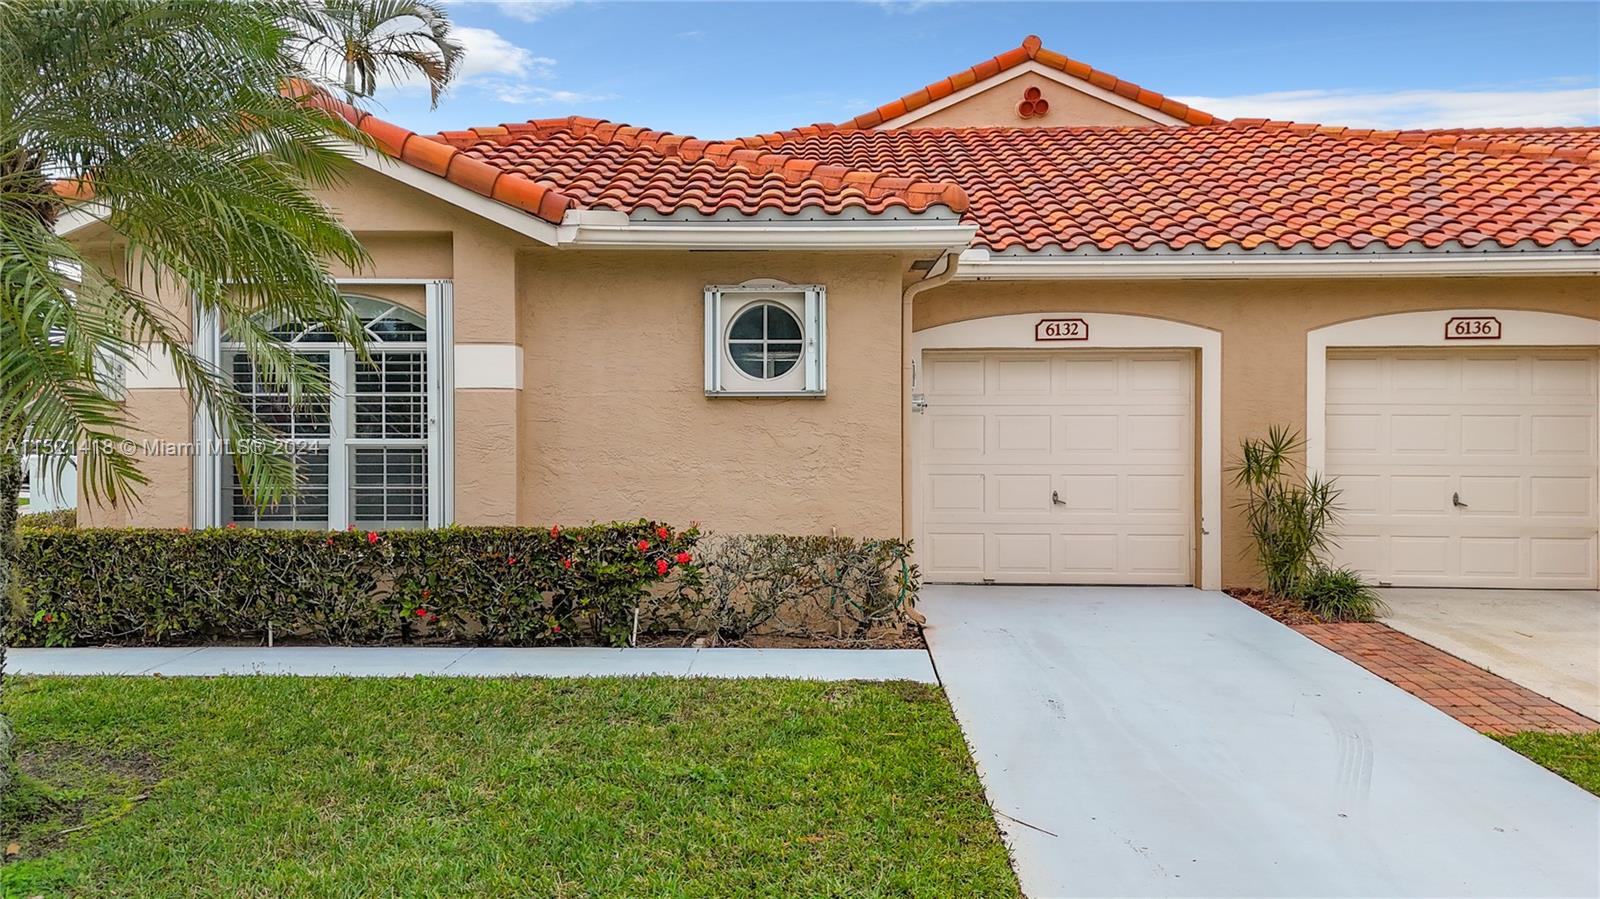 Property for Sale at 6132 Long Key Ln Ln, Boynton Beach, Palm Beach County, Florida - Bedrooms: 3 
Bathrooms: 3  - $369,000